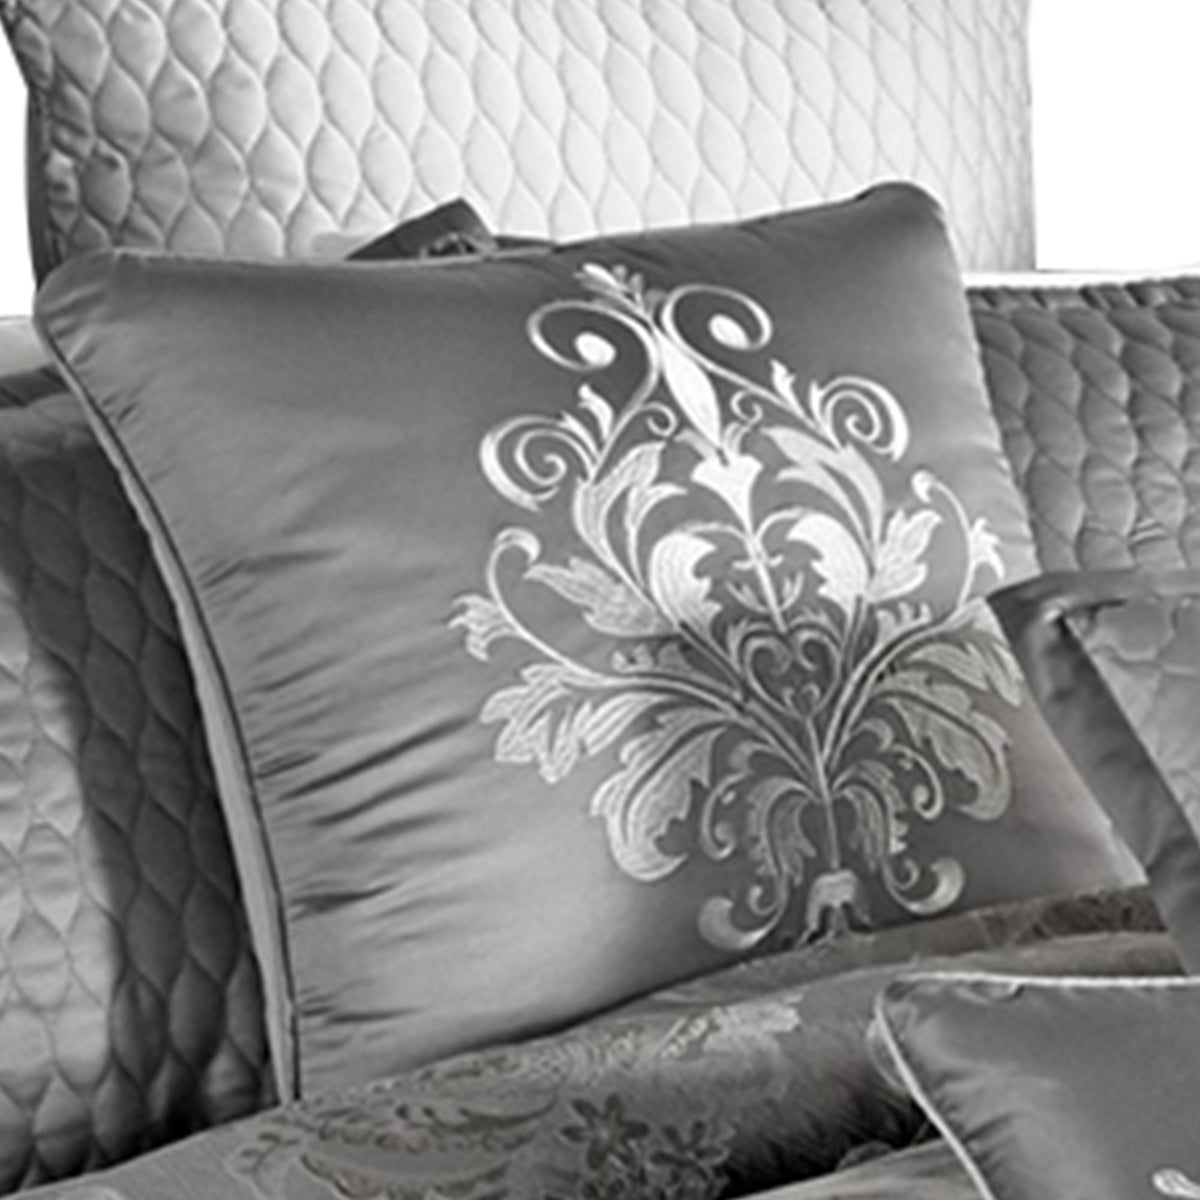 12 Piece King Polyester Comforter Set with Medallion Print, Platinum Gray - BM225173